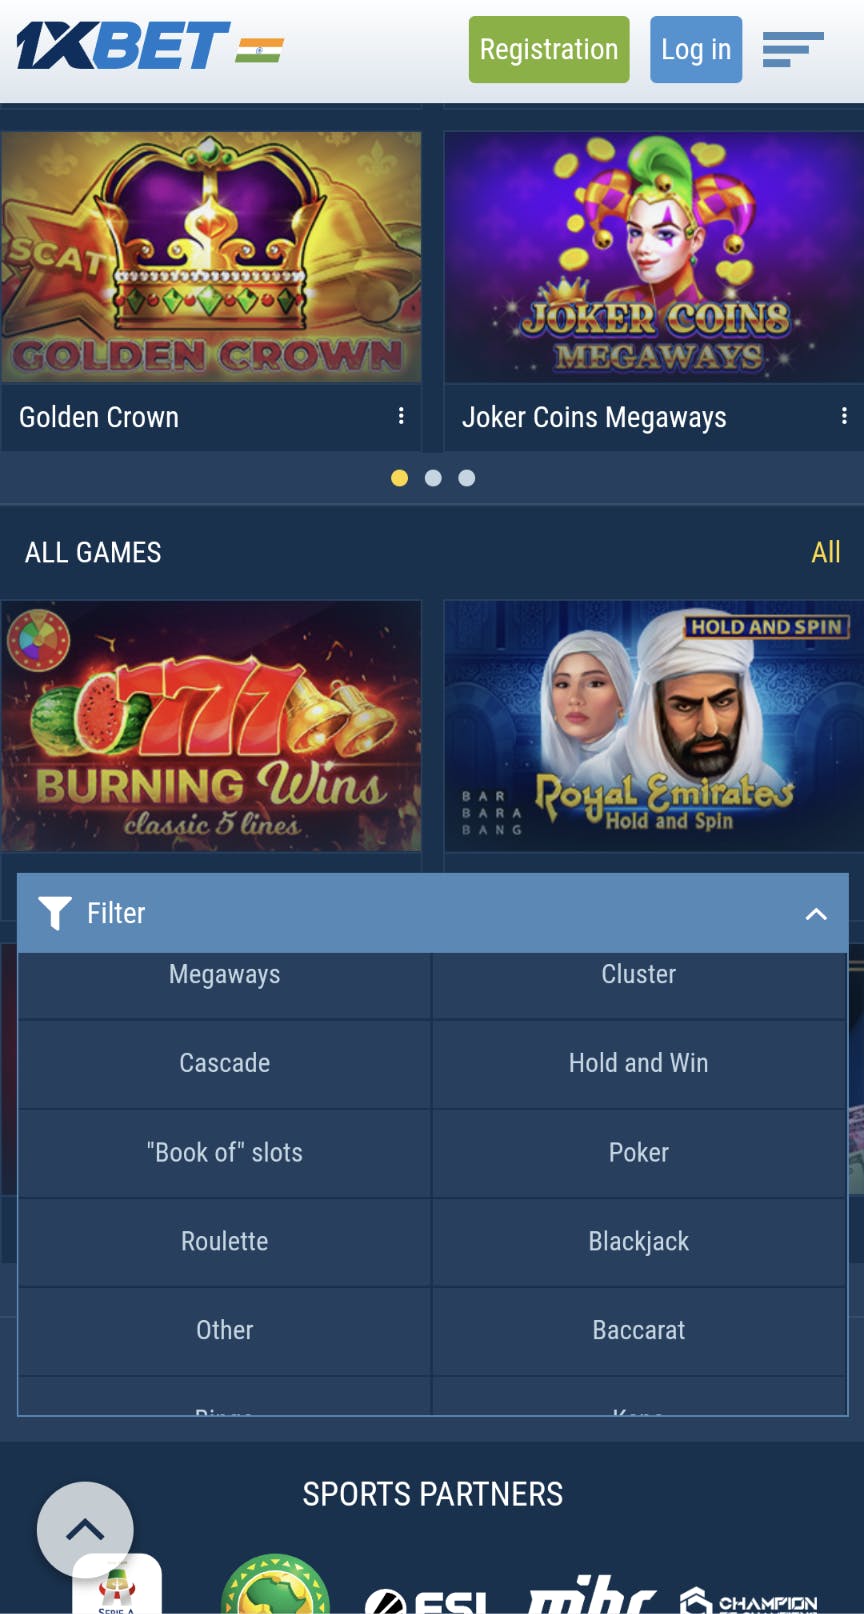 1xBet app all casino games.